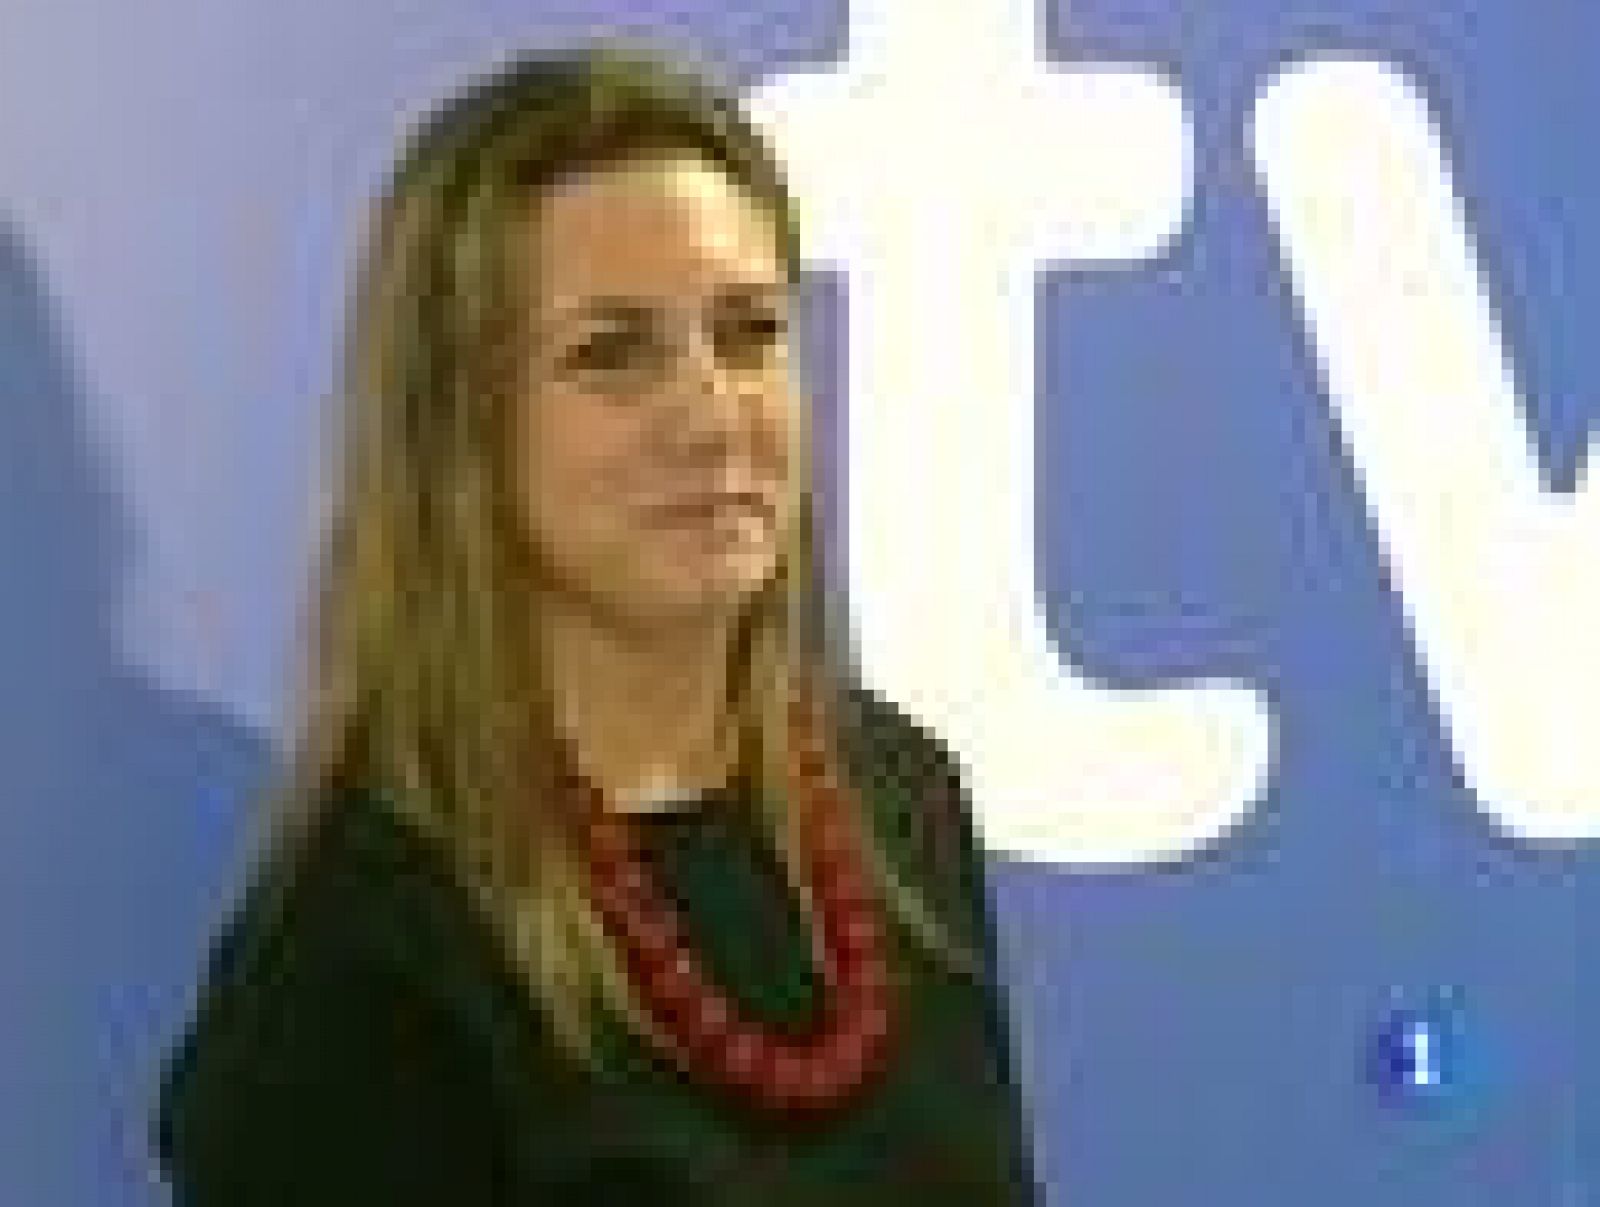  Ana María Bordas, nova directora de TVE en Sant Cugat